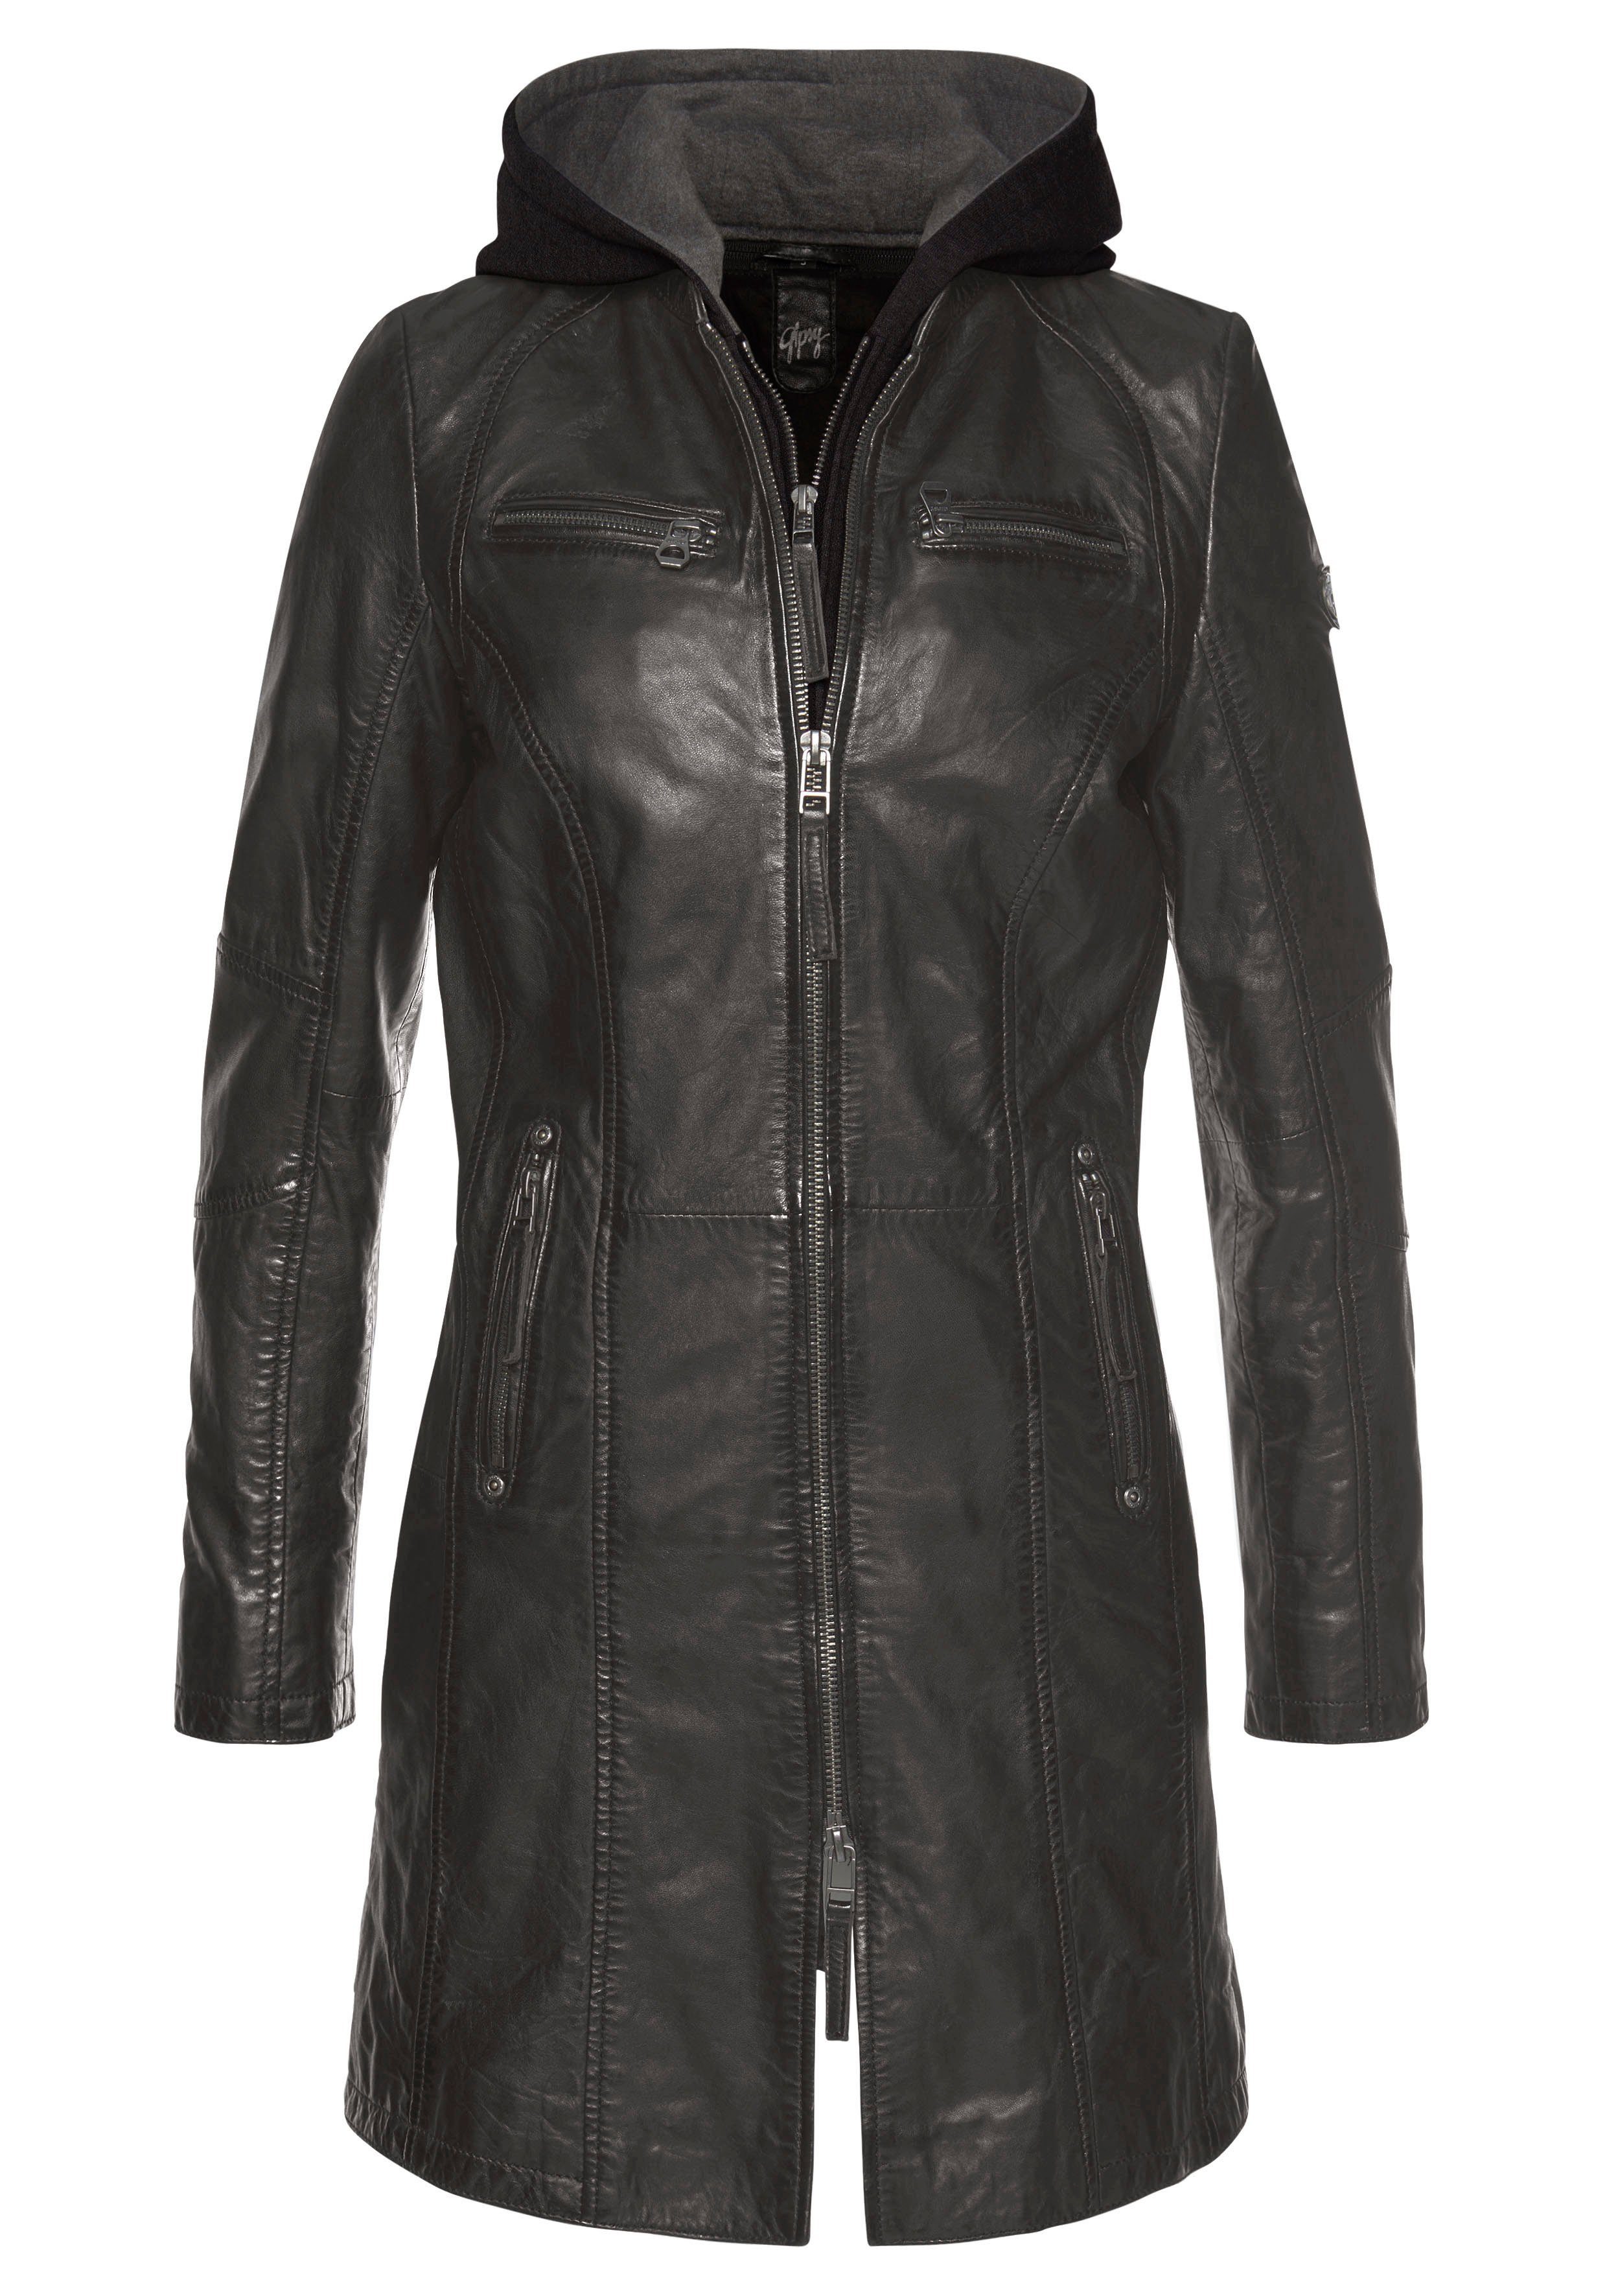 Gipsy Ledermantel »Bente« 2-in-1-Lederjacke mit abnehmbarem Kapuzen-Inlay  aus Jerseyqualität online kaufen | OTTO